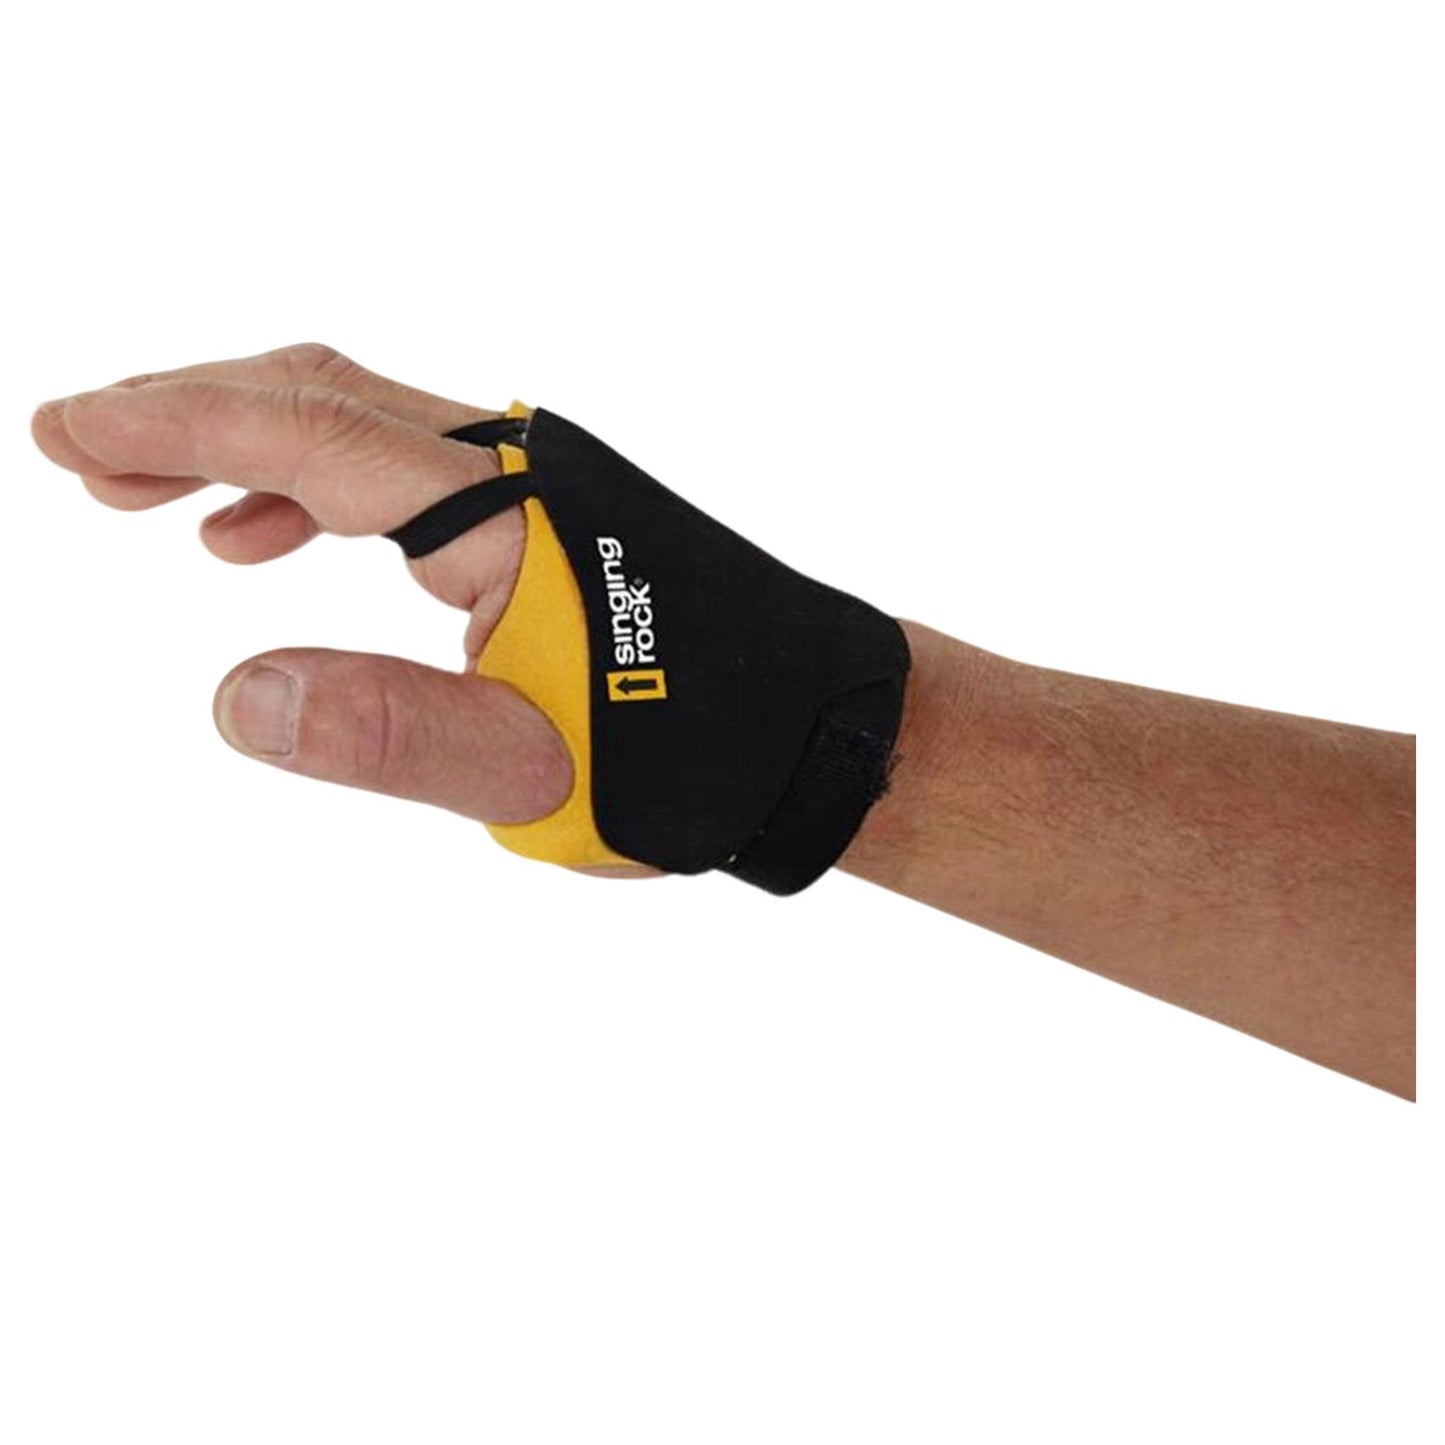 Craggy - Premium Crack Climbing Gloves | Enhanced Grip & Durability